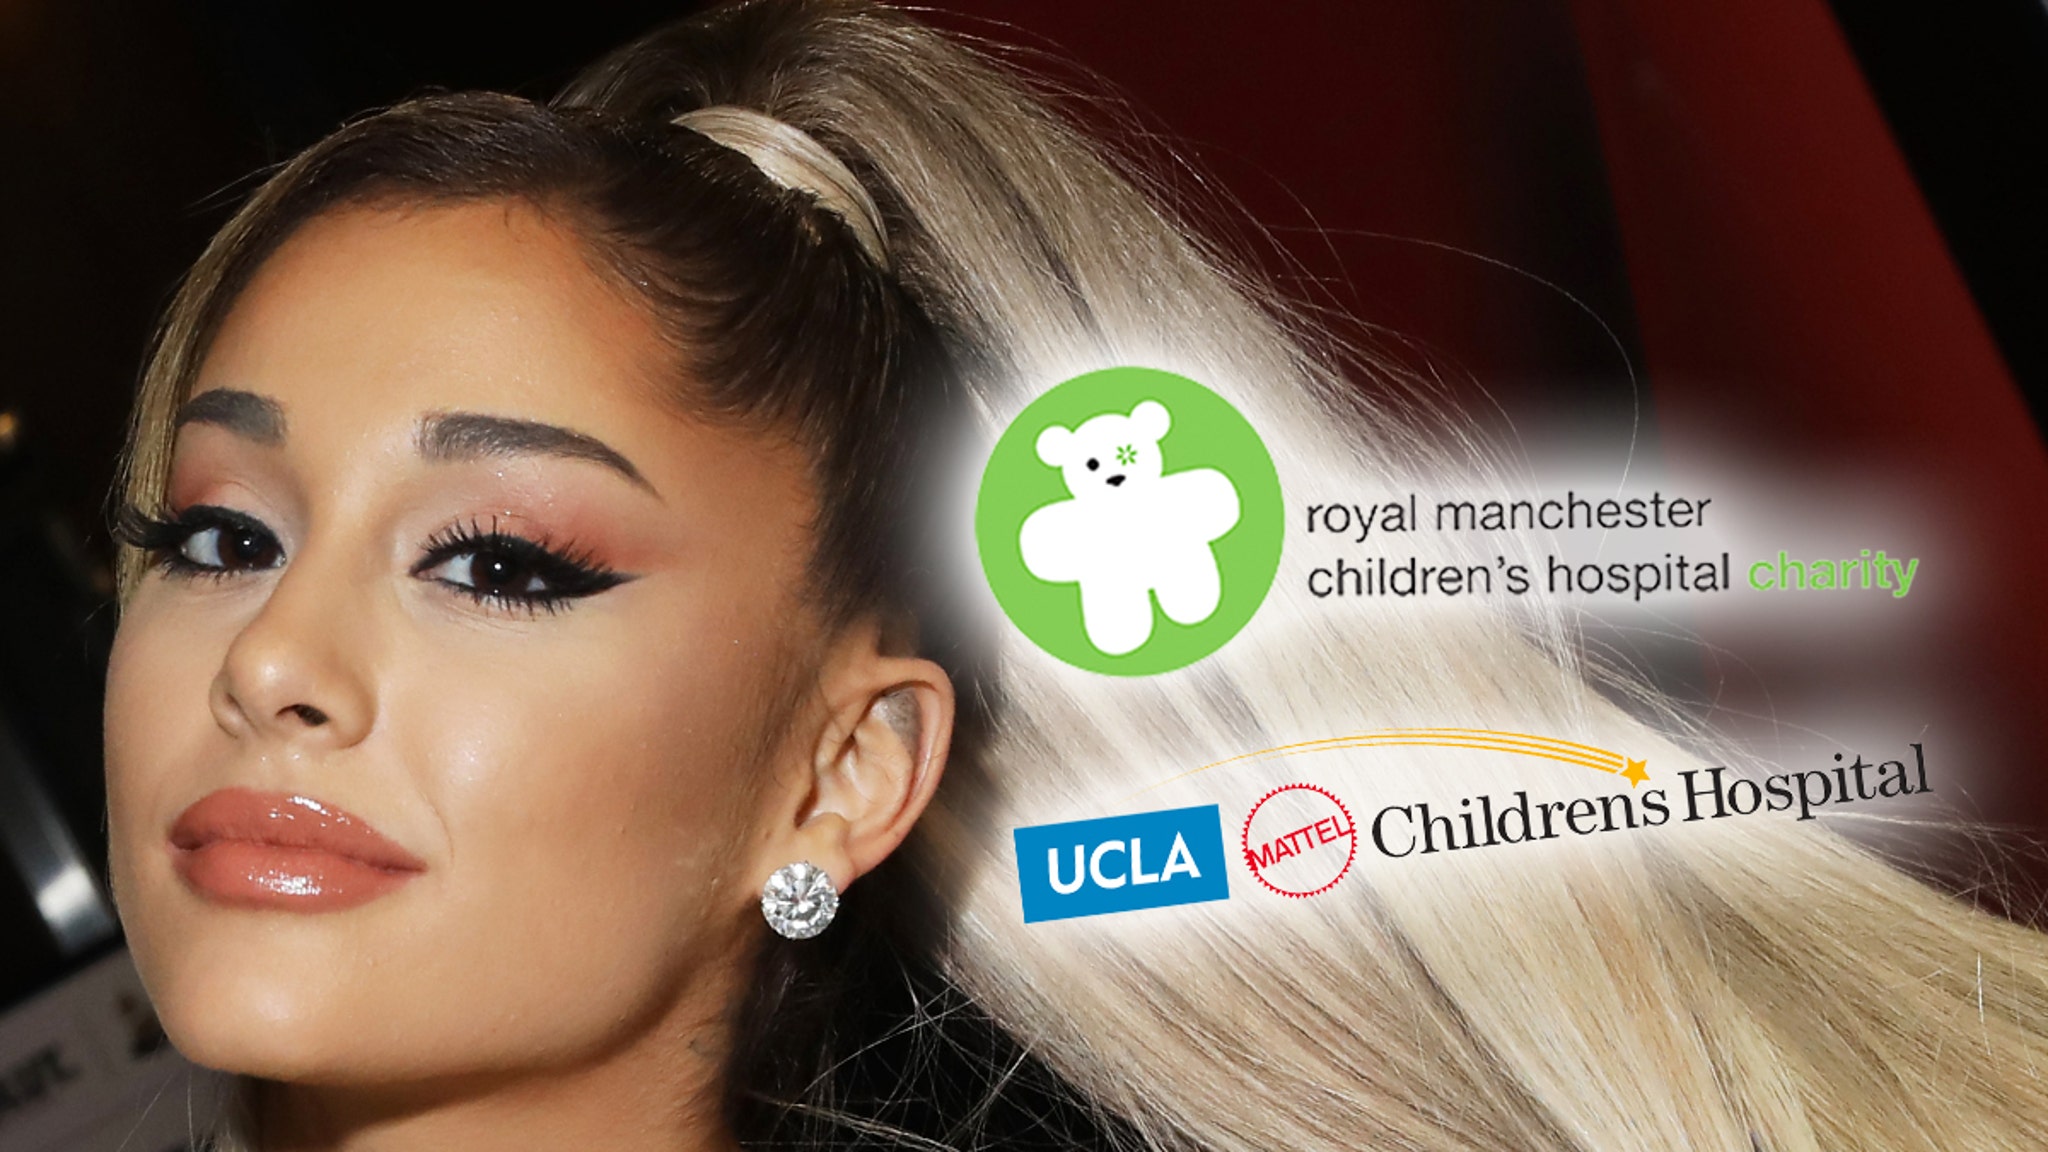 Ariana Grande plays Santa Claus for children in children’s hospitals